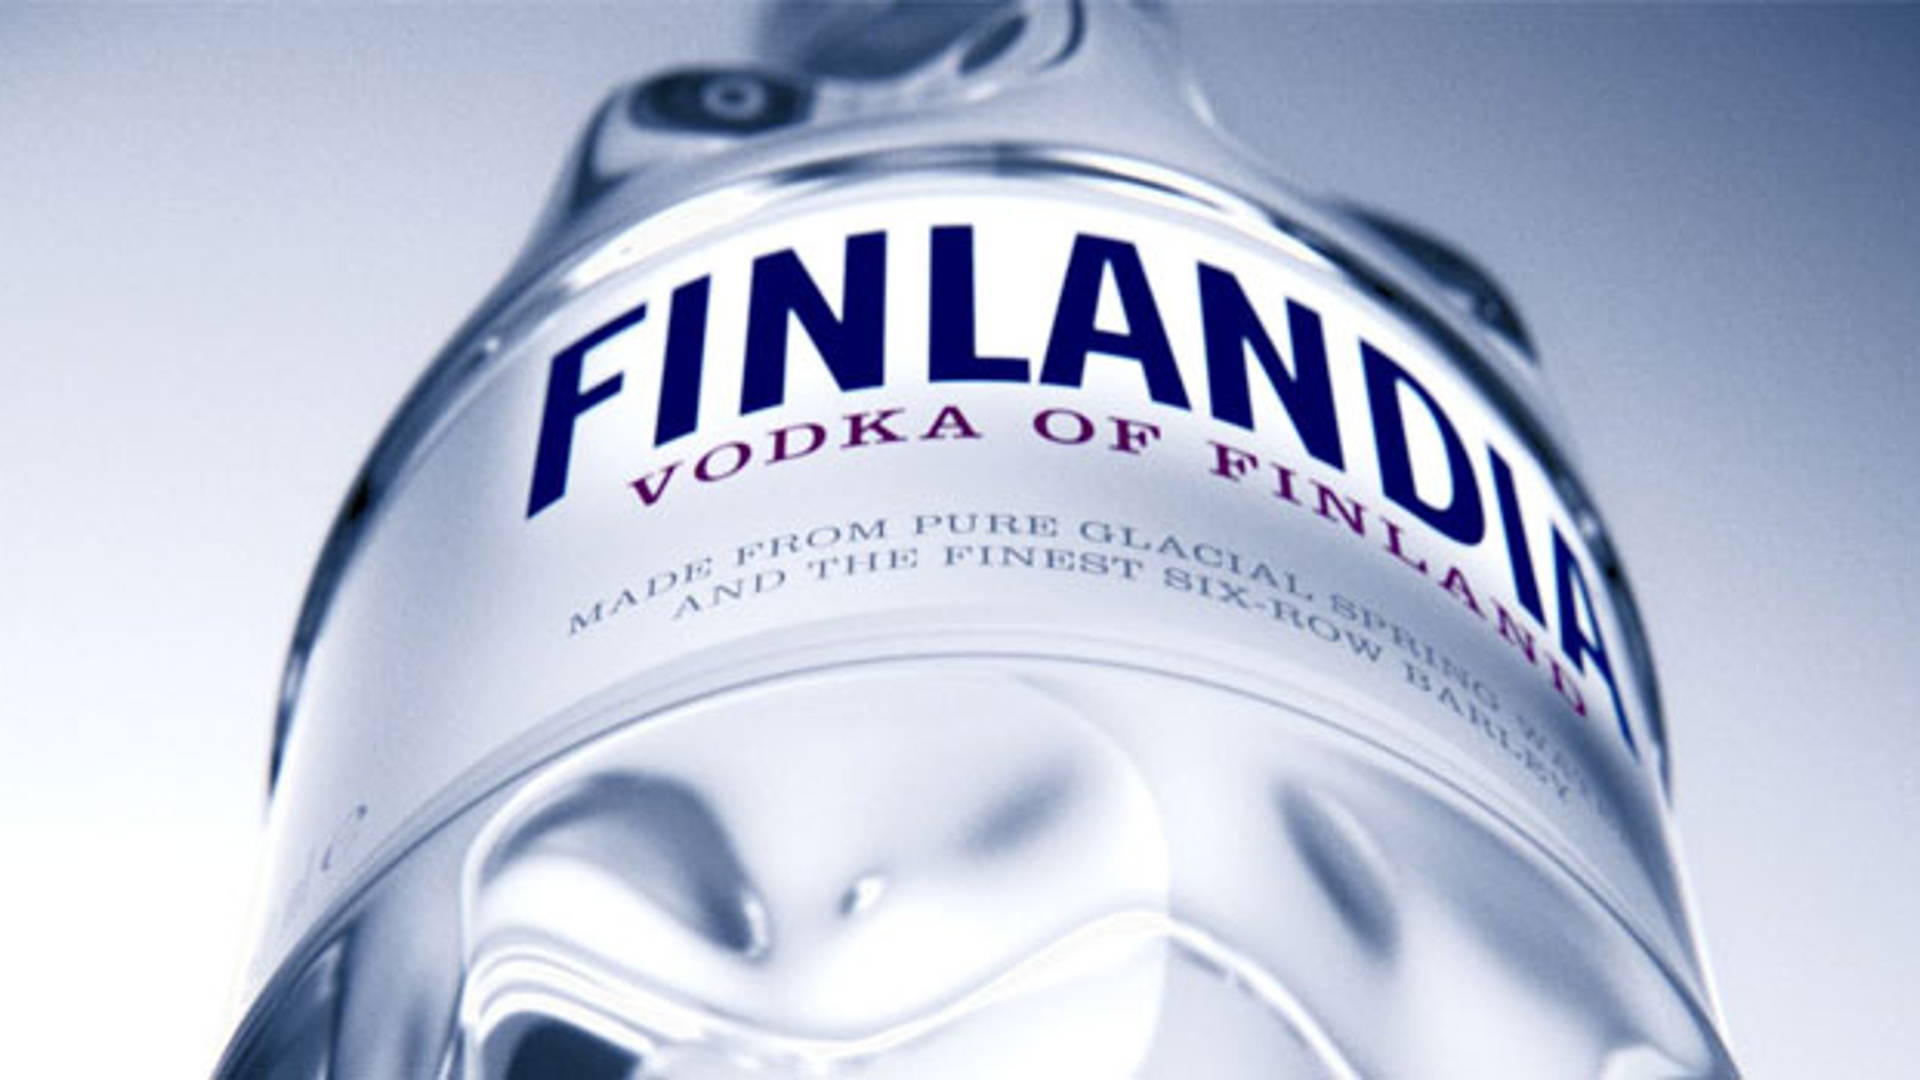 Featured image for Finlandia Vodka